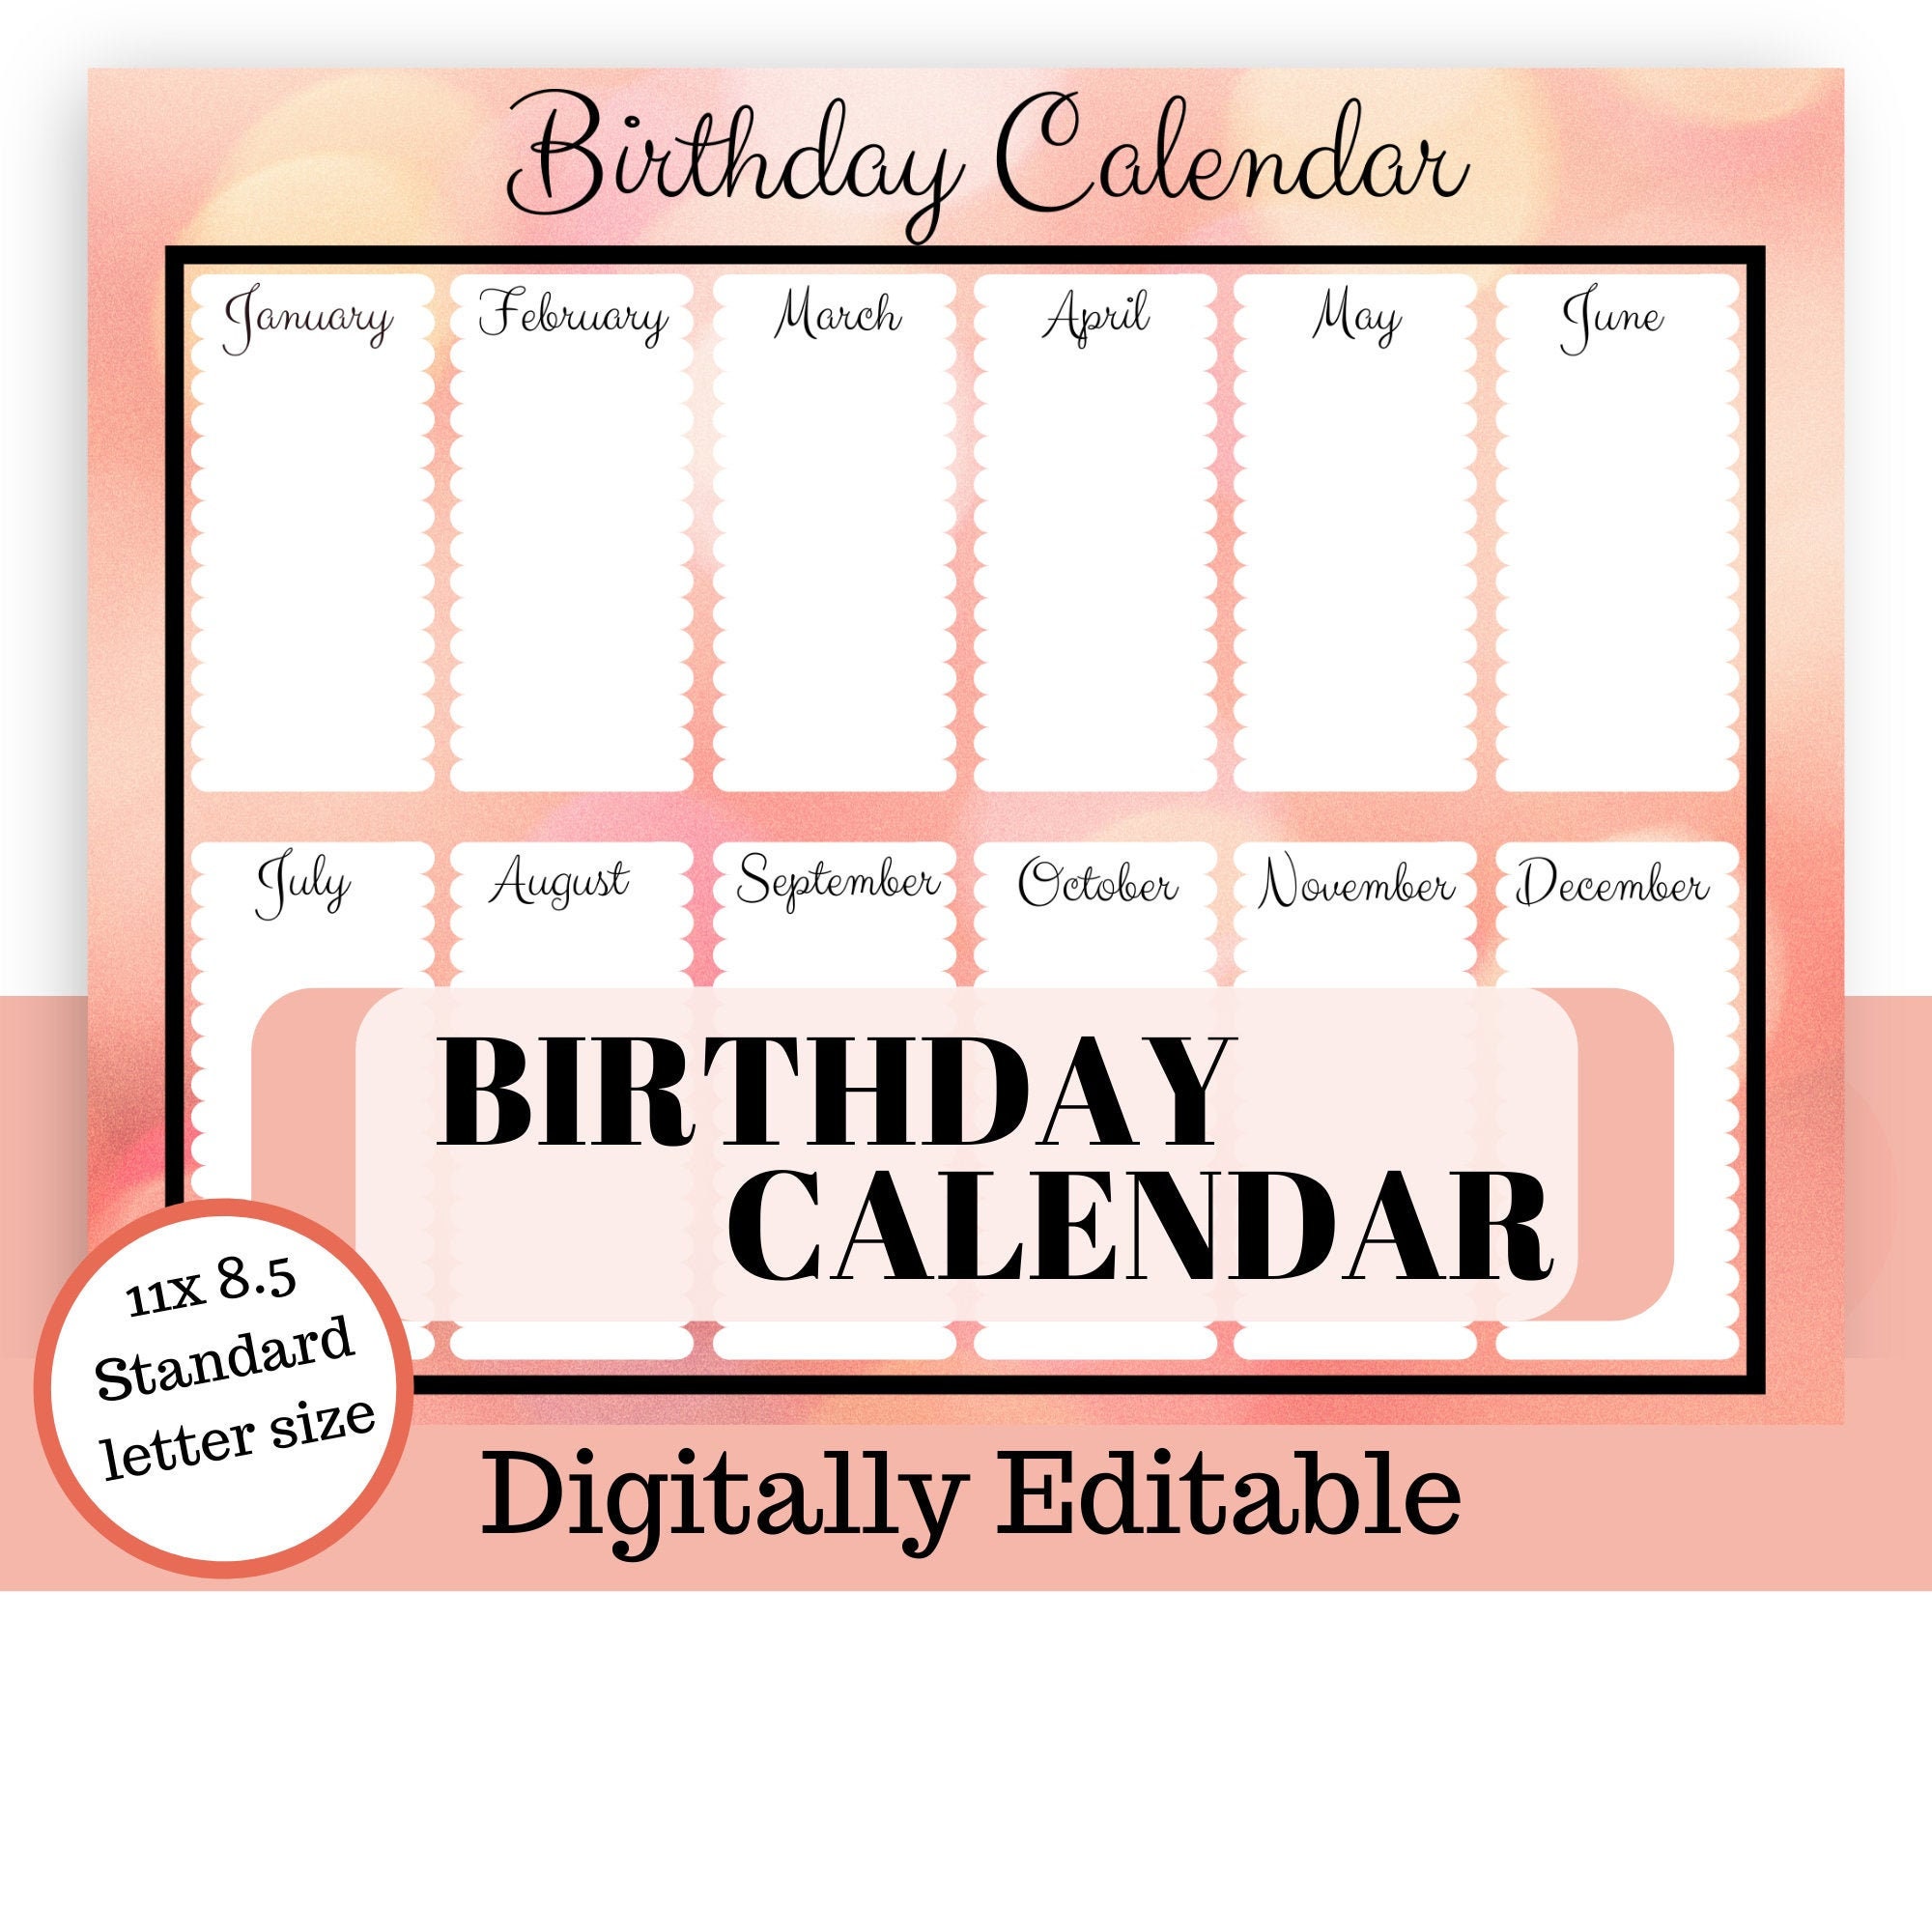 editable birthday calendar template free 28